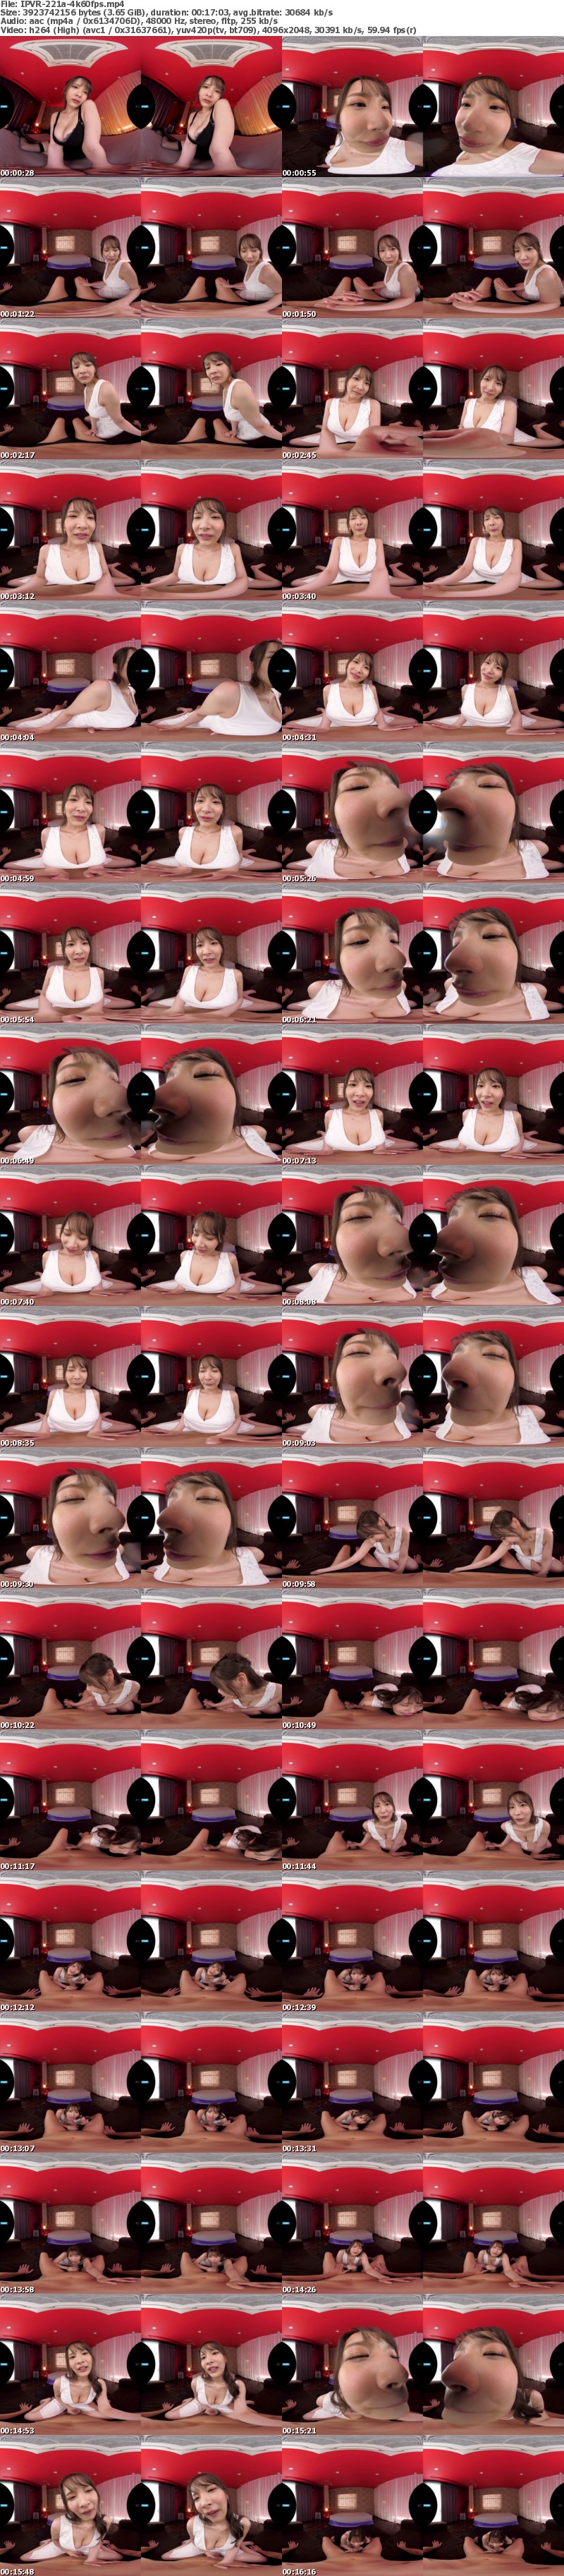 [VR] IPVR-221【VR】「私とキスしてください」 Lカップ巨乳美少女のトロけるディープキスSex VR 激情接吻 庵ひめか